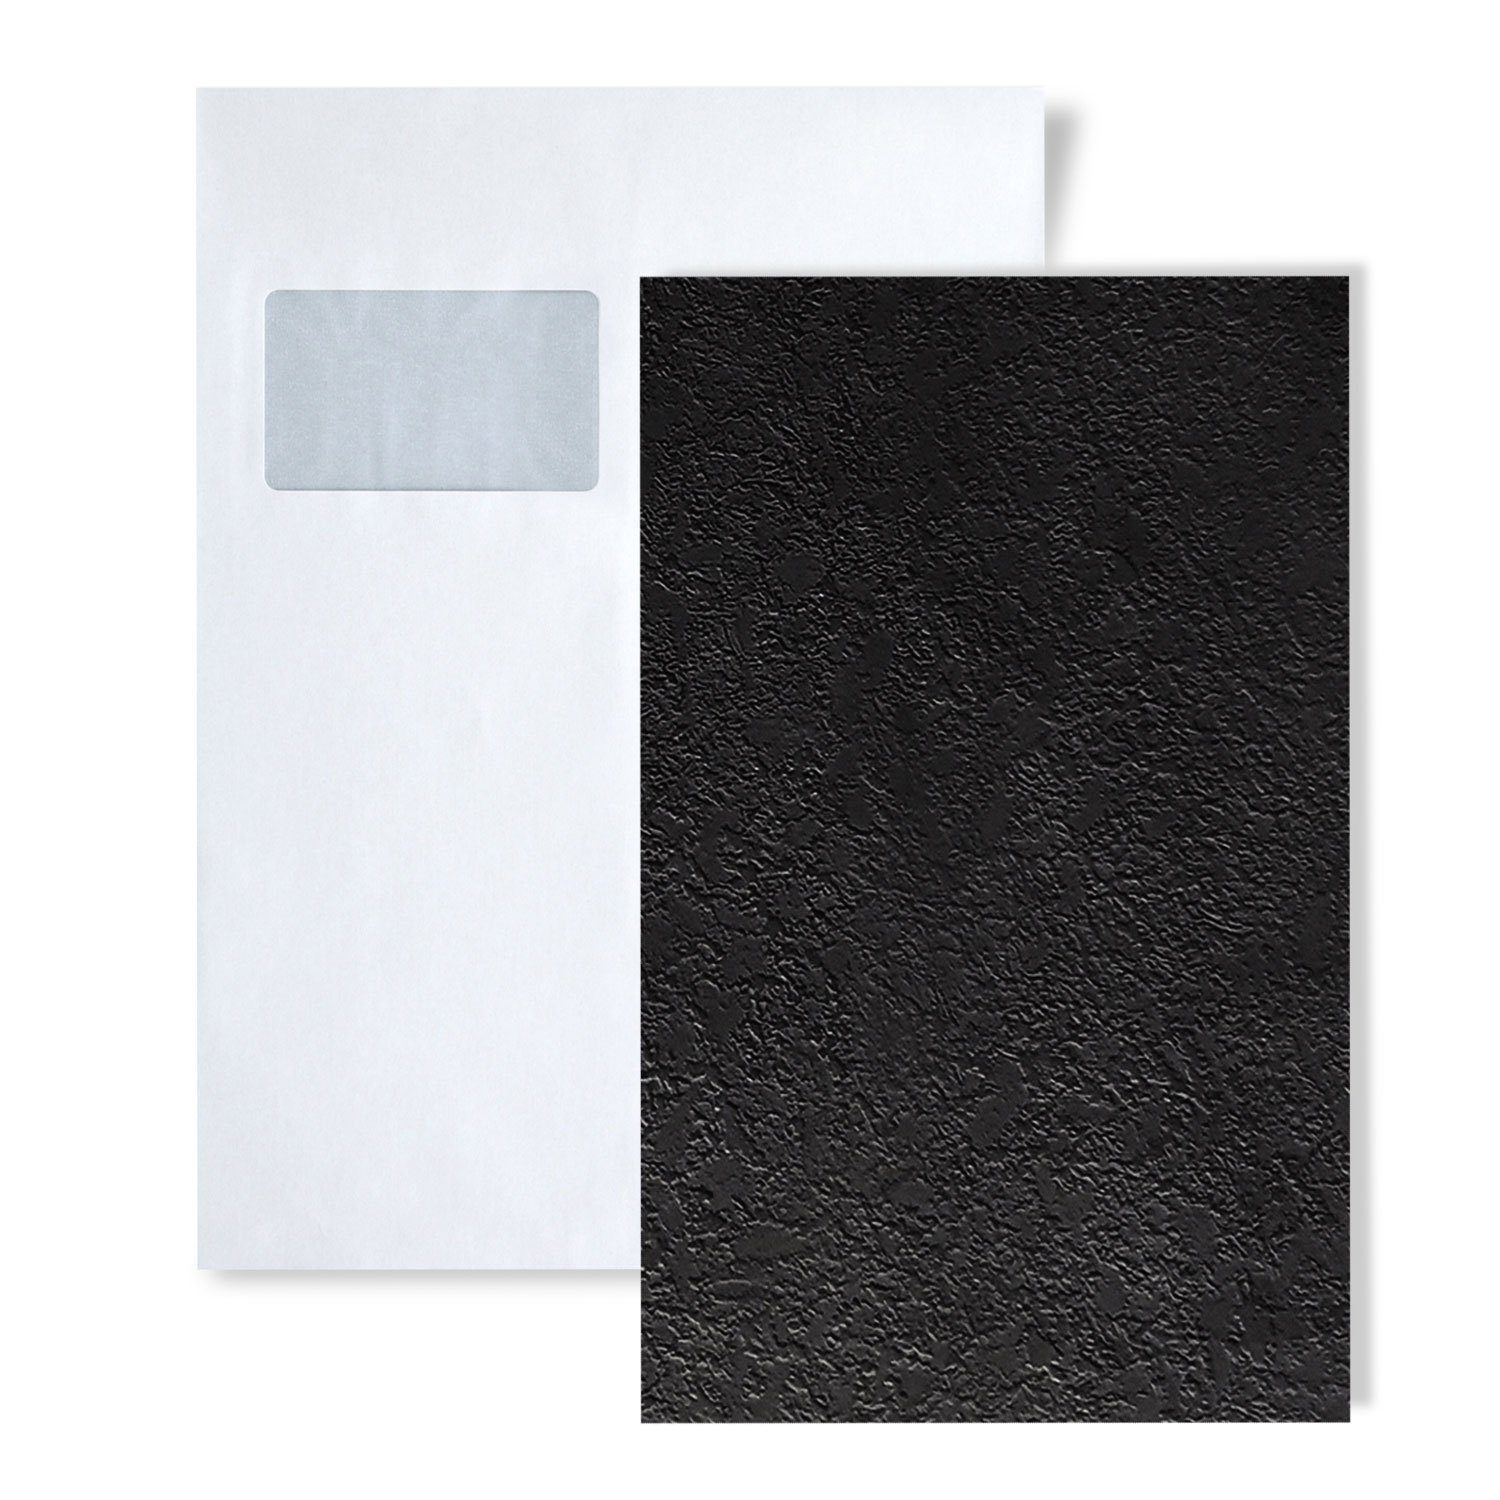 Wallface Dekorpaneele S-22716-SA, BxL: 15x20 cm, (1 MUSTERSTÜCK, Produktmuster, 1-tlg., Muster des Dekorpaneels) schwarz